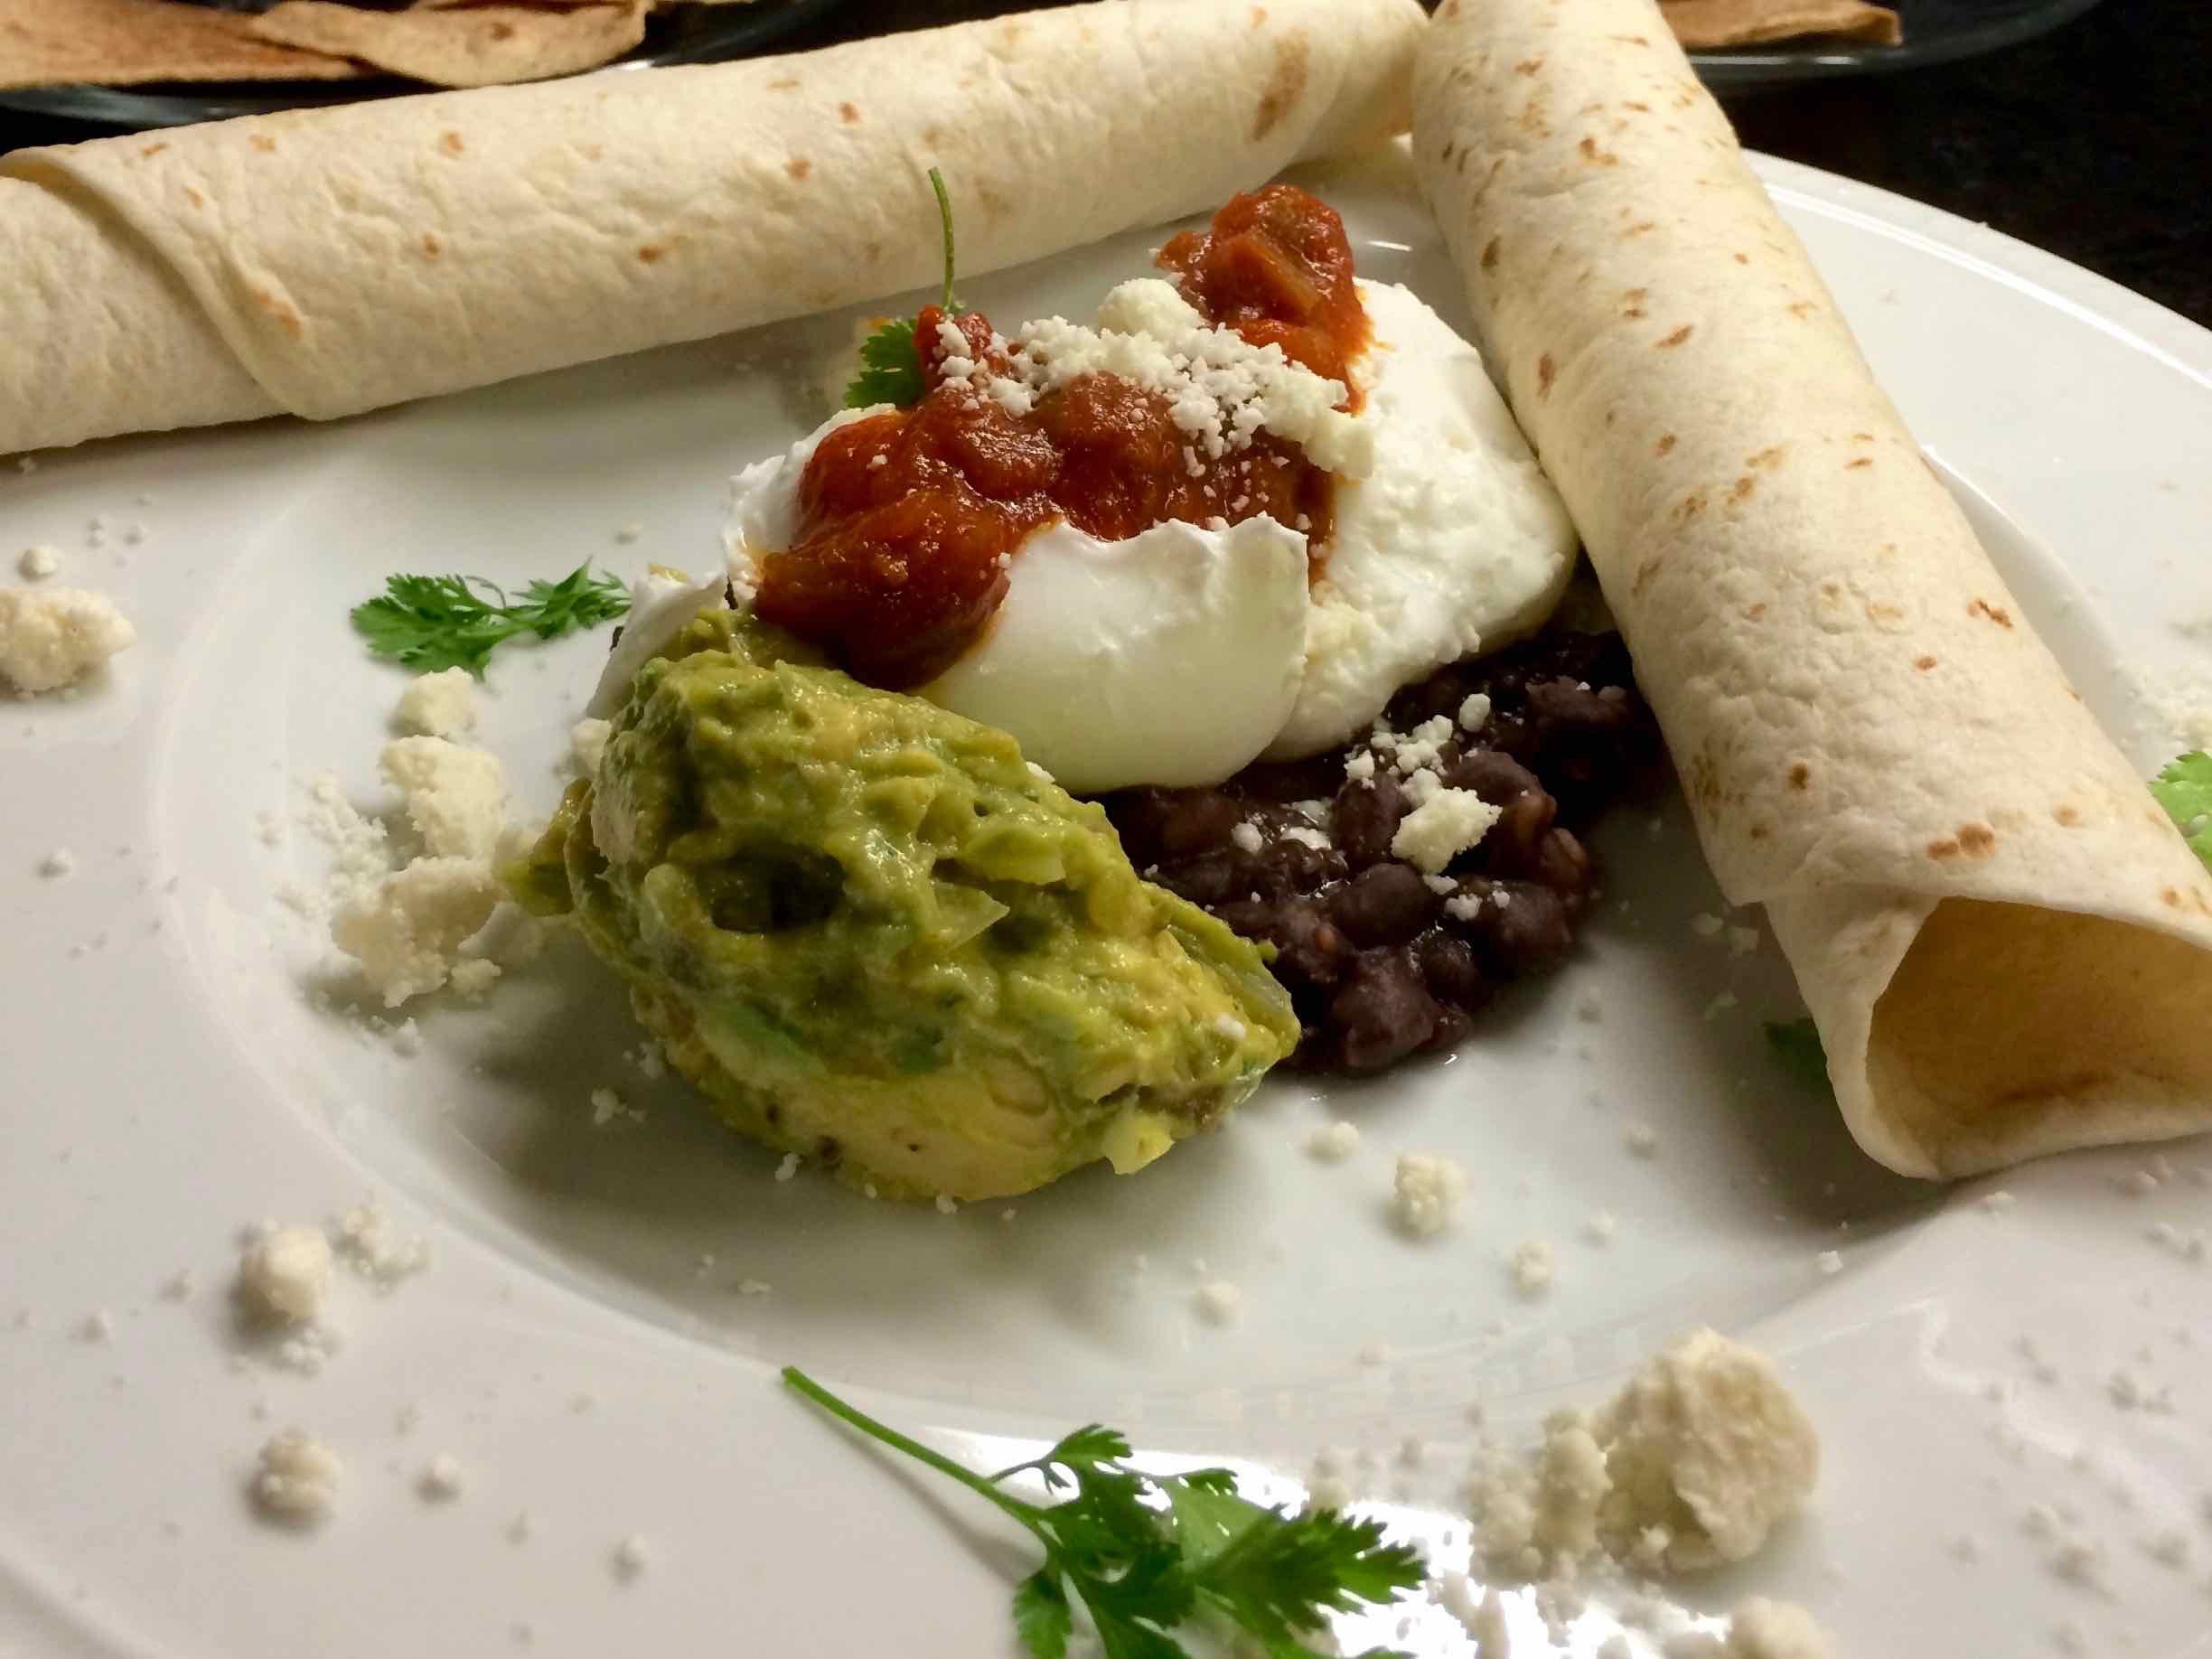 Breakfast at Coach Stop Inn – Huevos rancheros poached eggs with guacamole and salsa